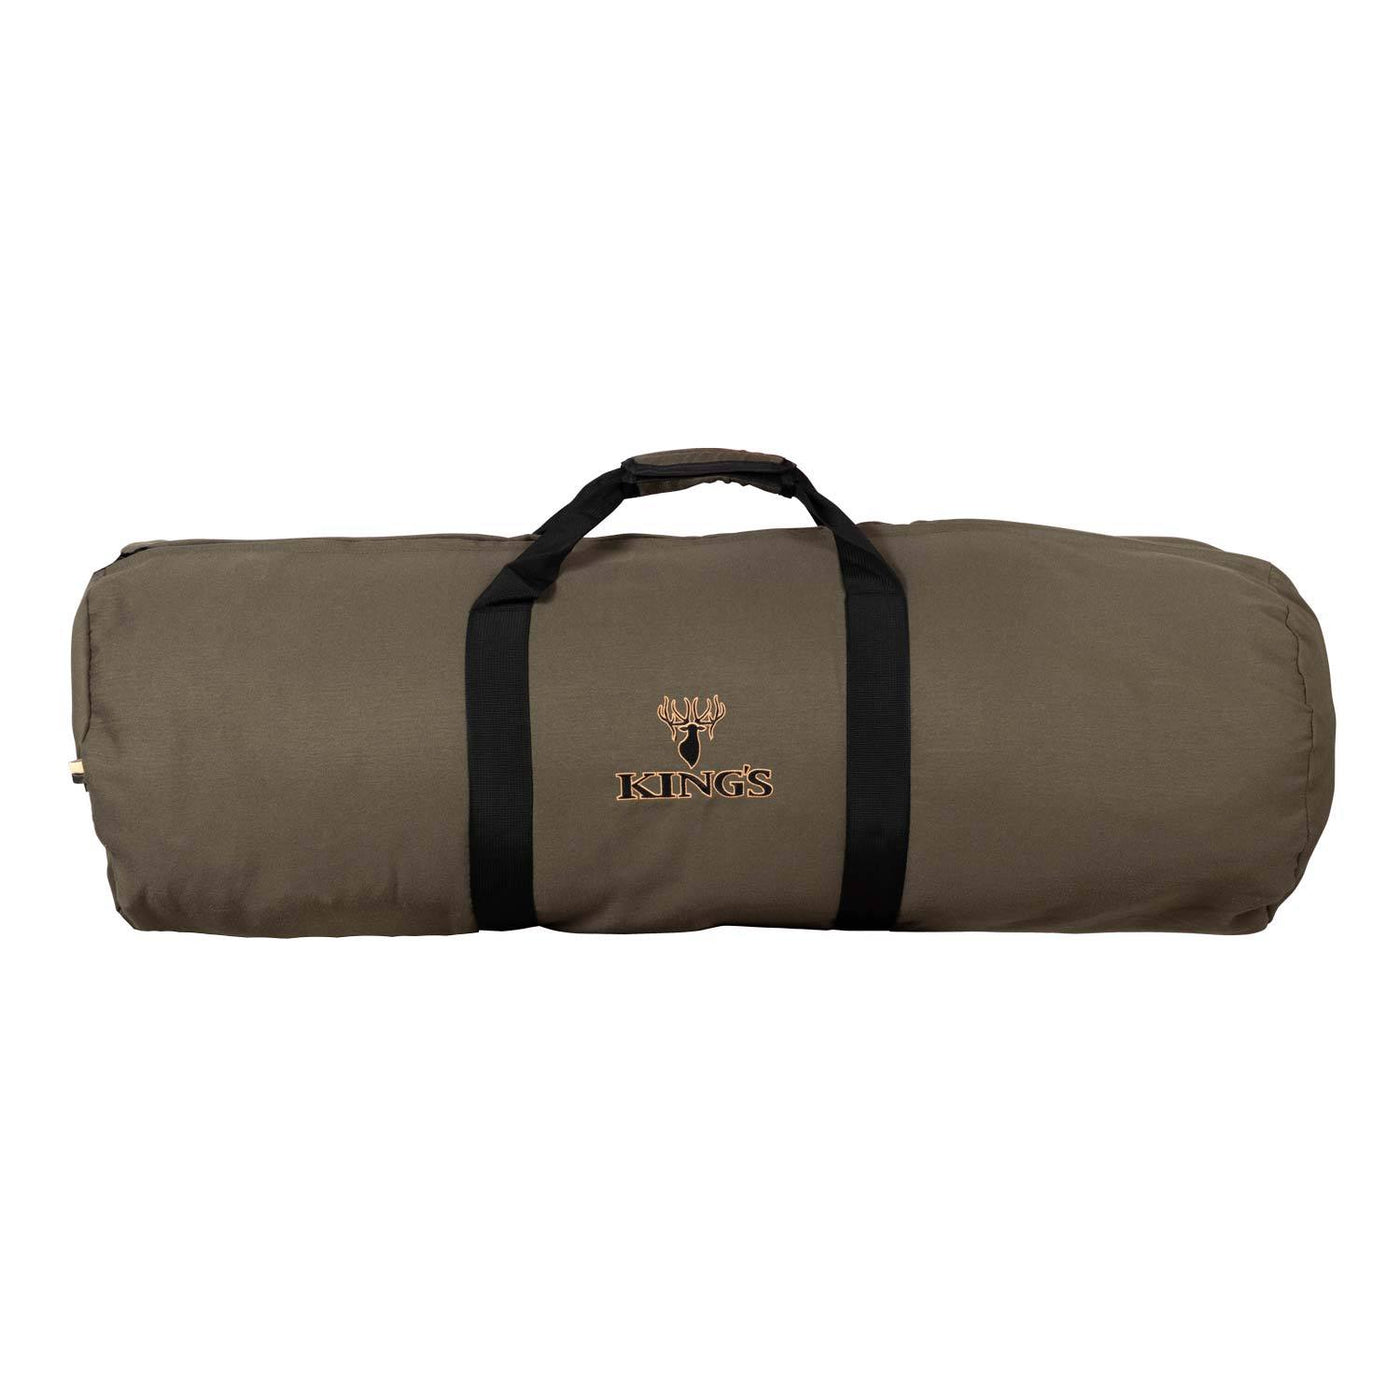 Hunter Series -35 Degree Sleeping Bag | Corbotras lochi